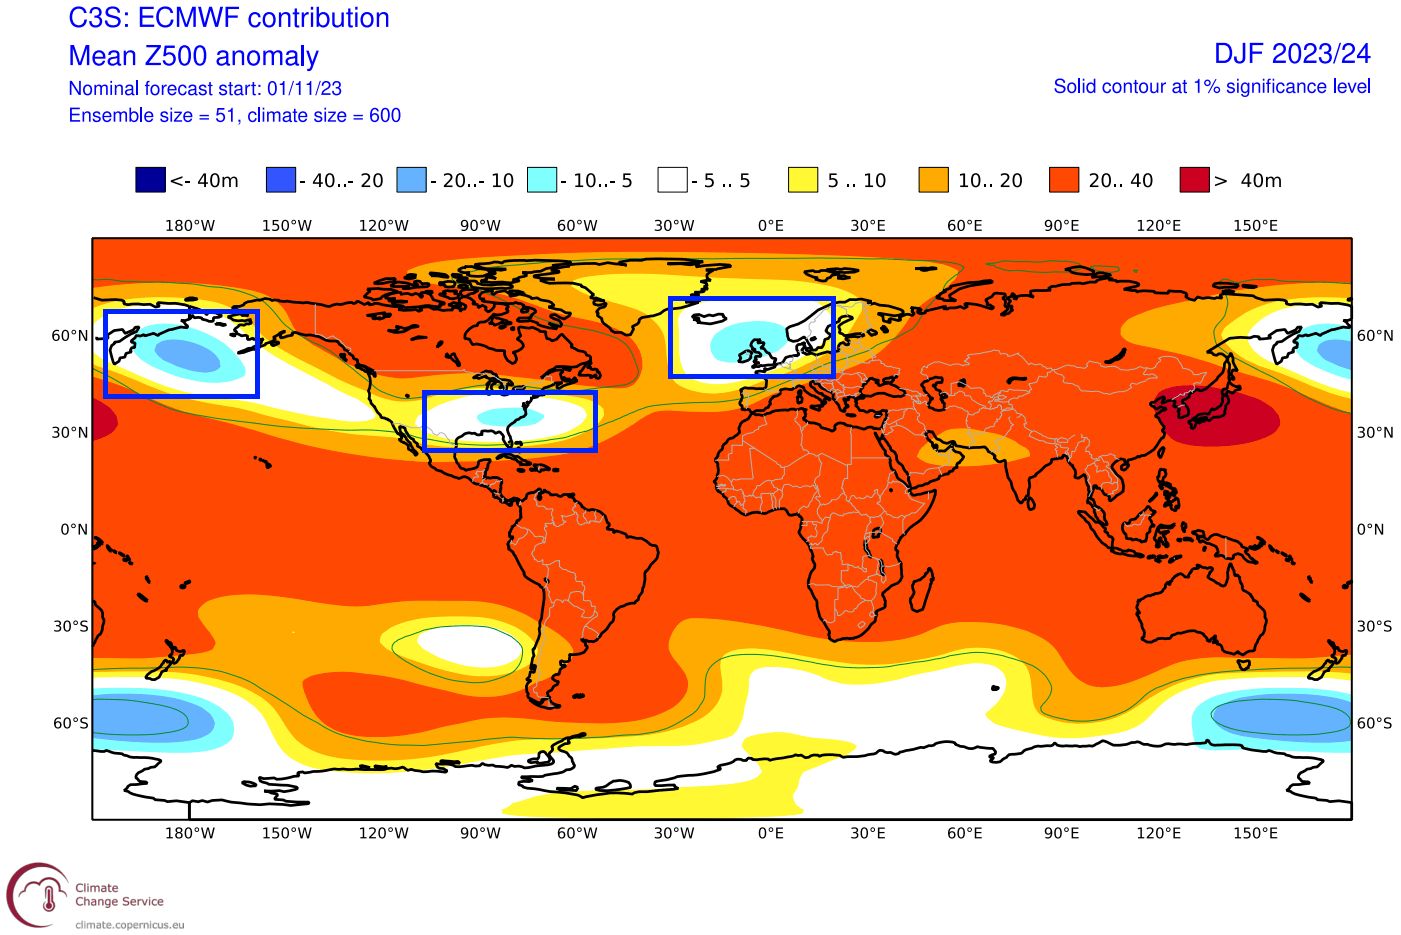 winter-forecast-2023-2024-ecmwf-global-pressure-pattern-anomaly-final